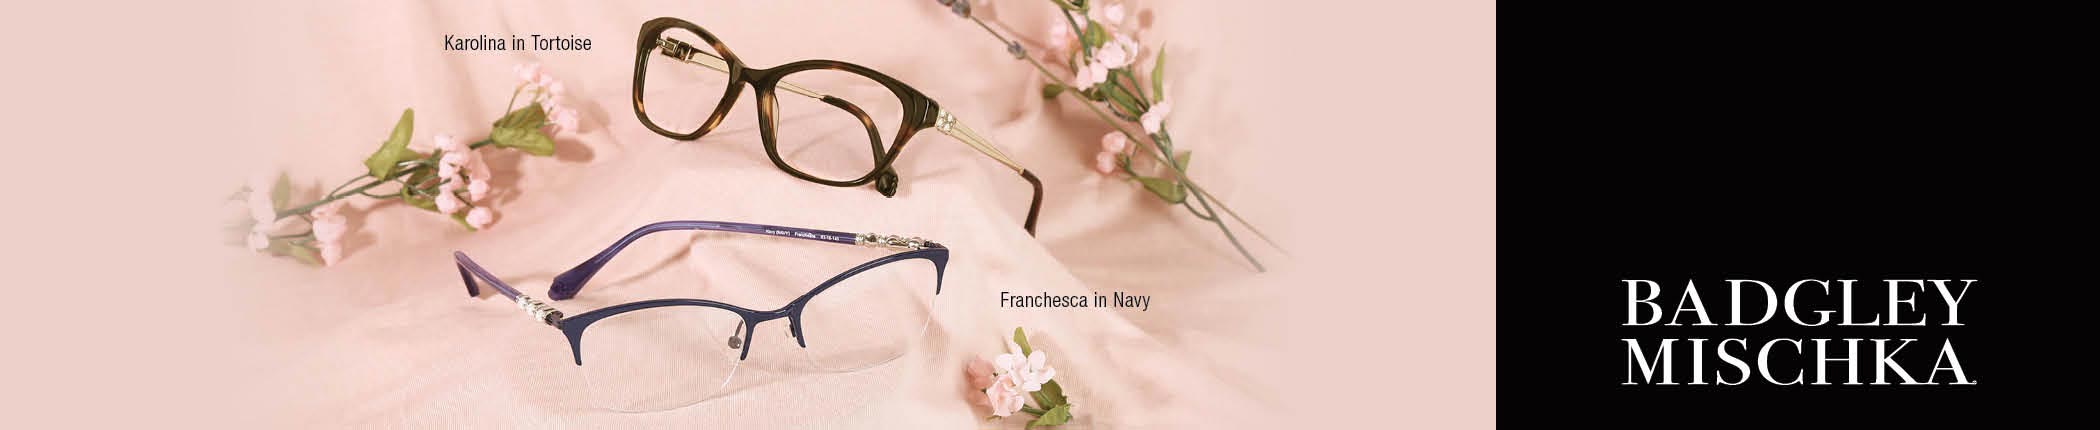 Shop Badgley Mischka Eyeglasses - featuring Karolina and Franchesca